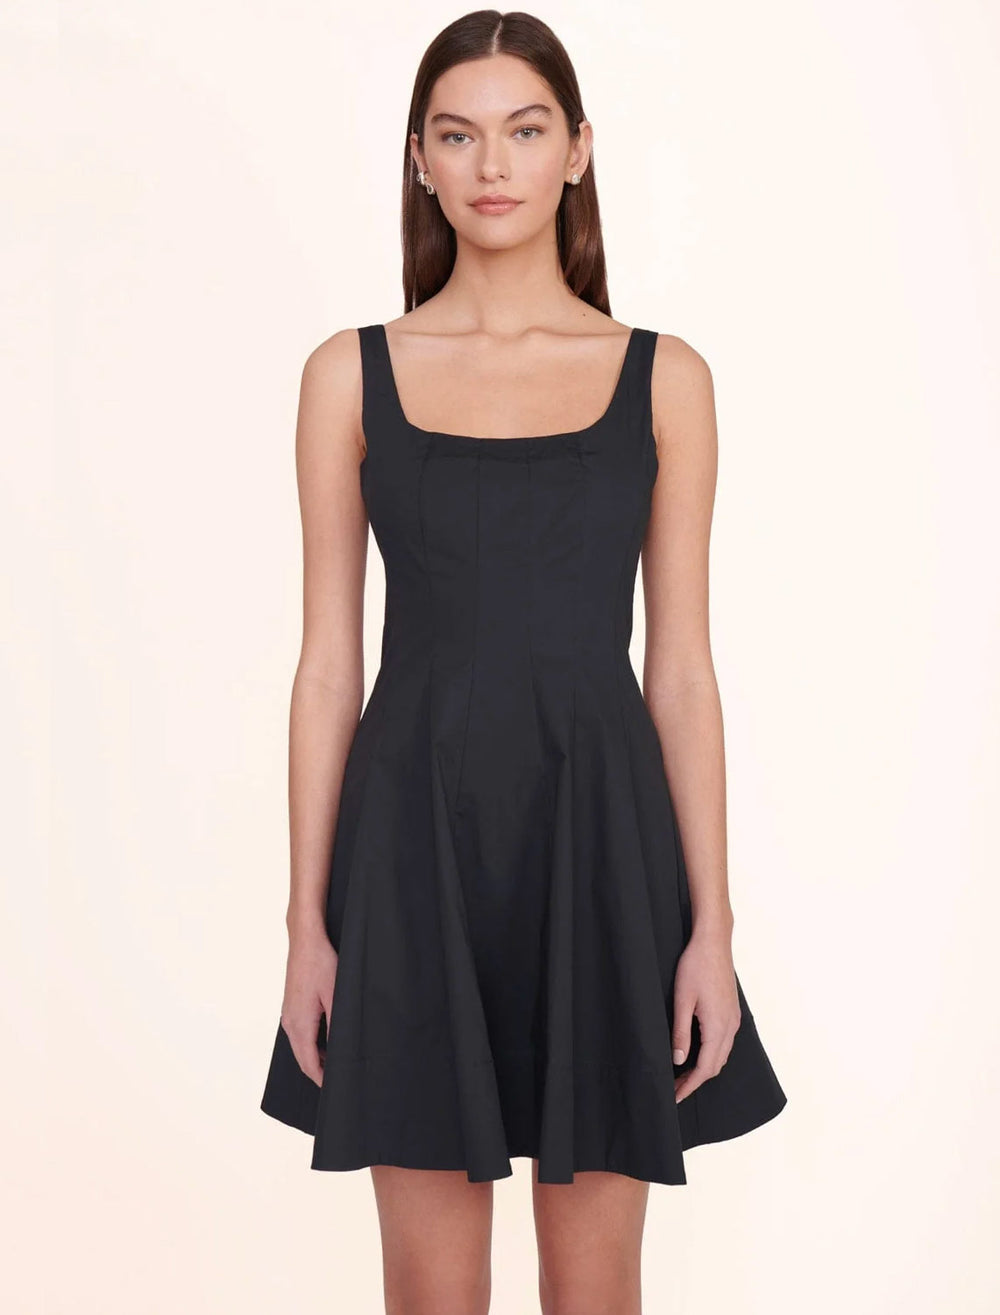 Model wearing STAUD's mini wells dress in black.